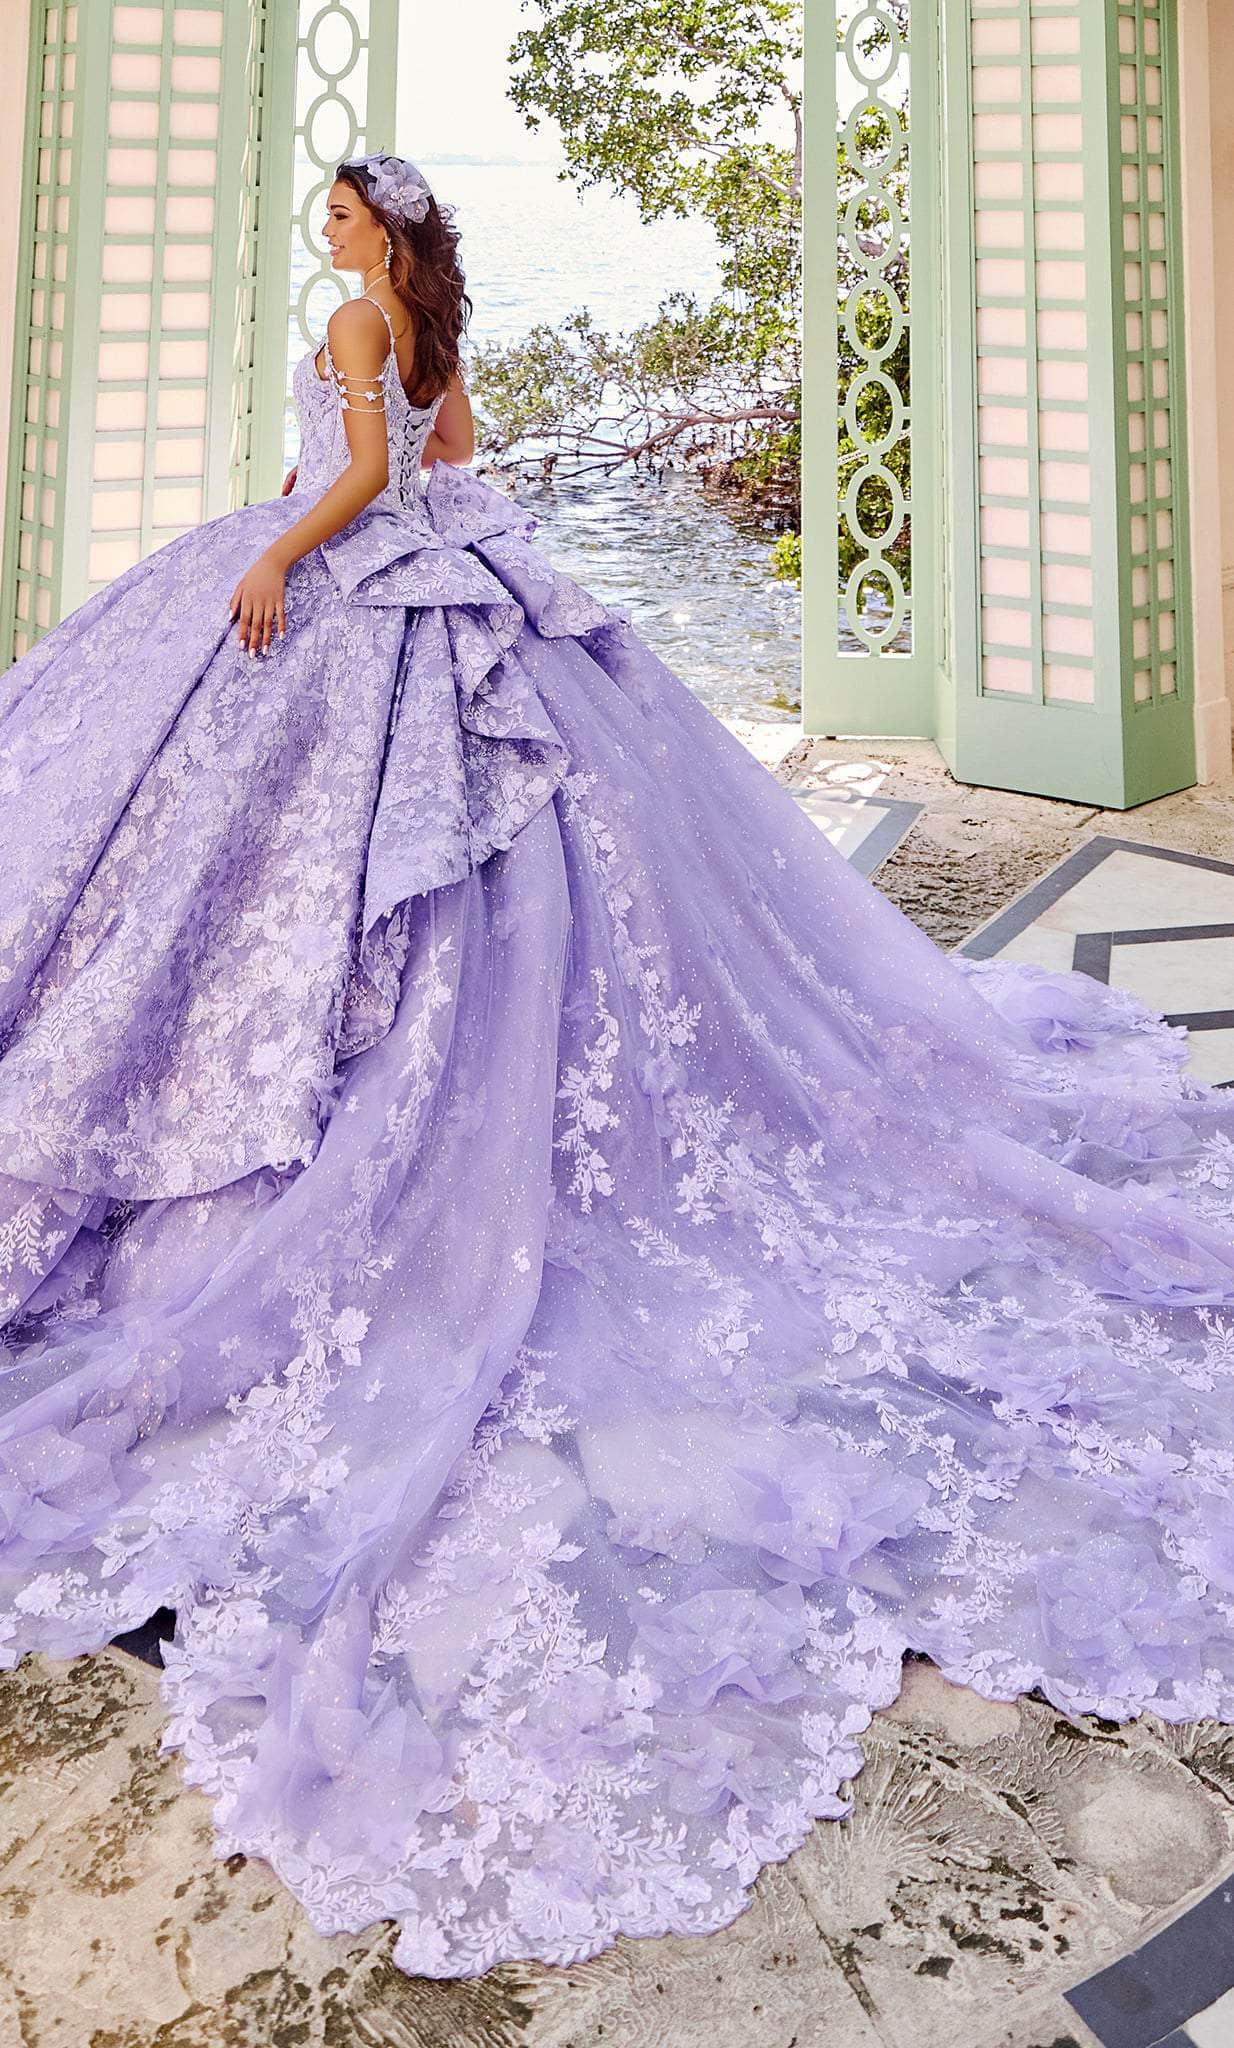 Princesa by Ariana Vara PR30139 - Bolero-Attached Floral Ball Gown